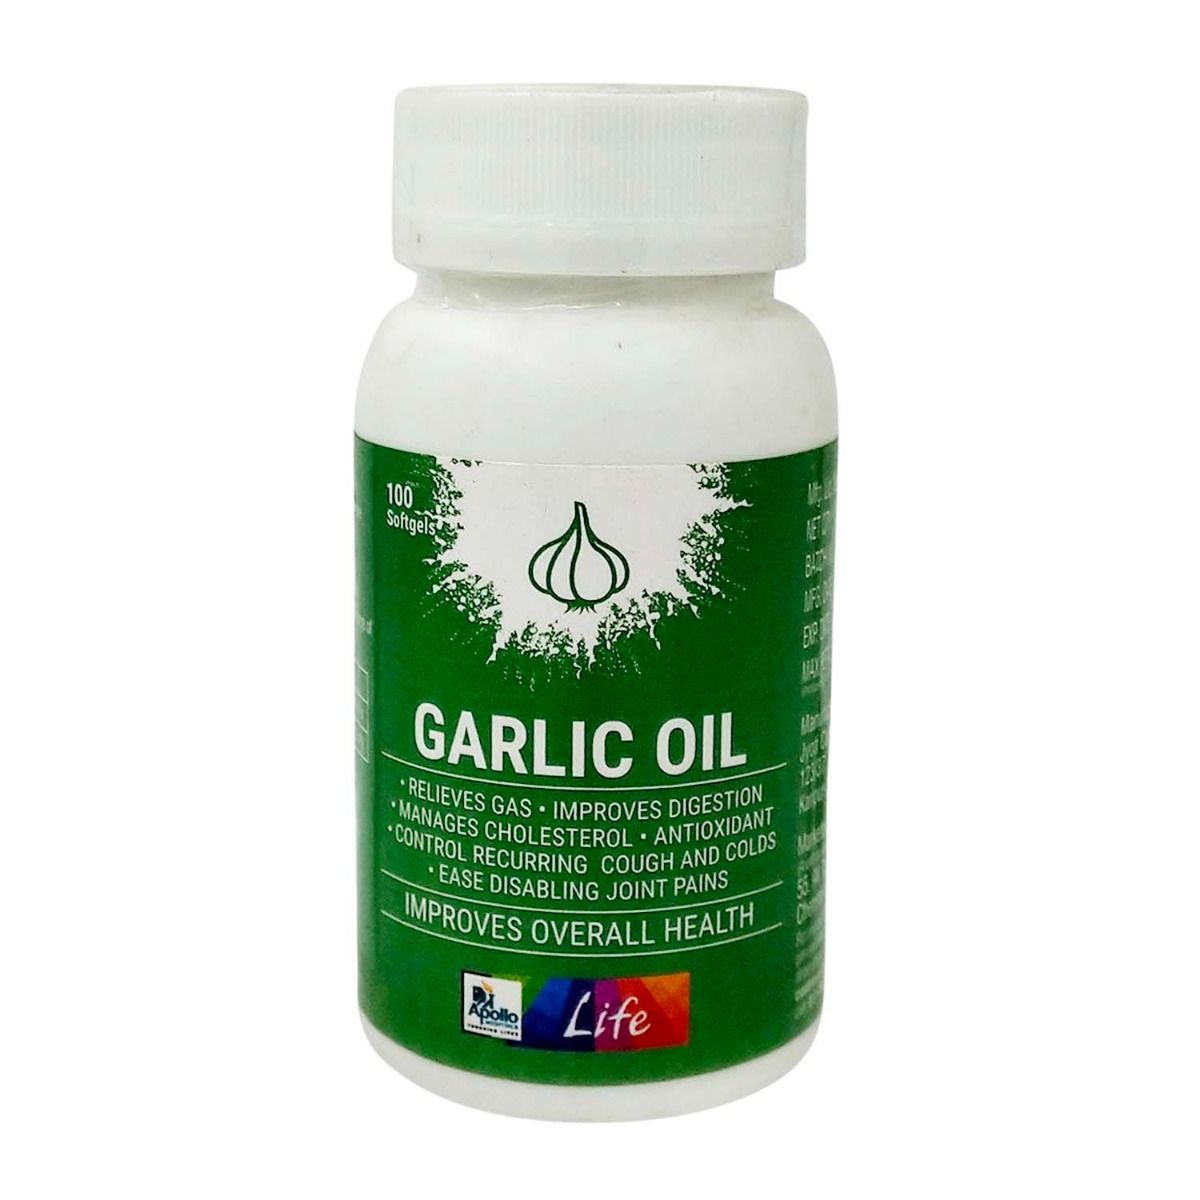 Apollo Life Garlic Oil Softgel, 100 Capsules, Pack of 1 